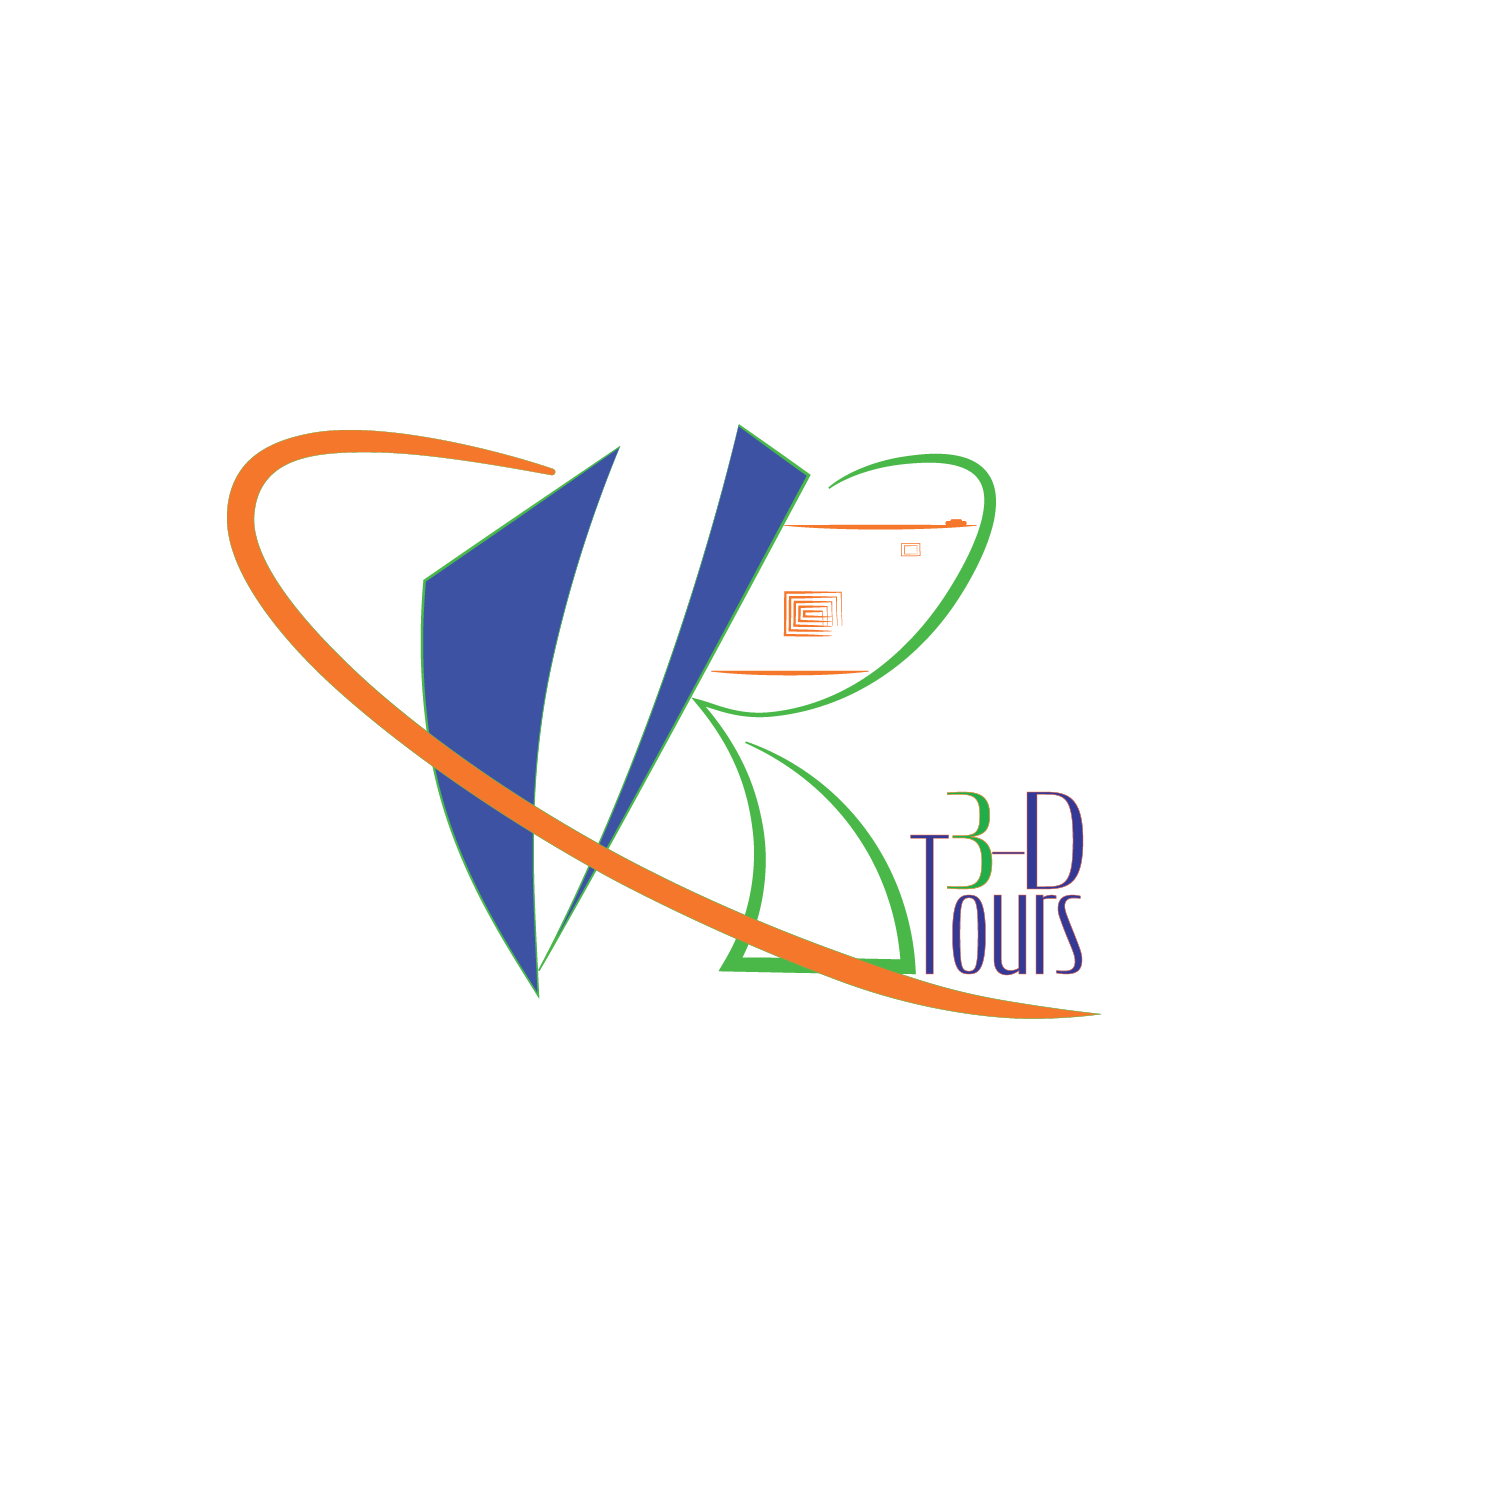 VR3D-Tours Logo